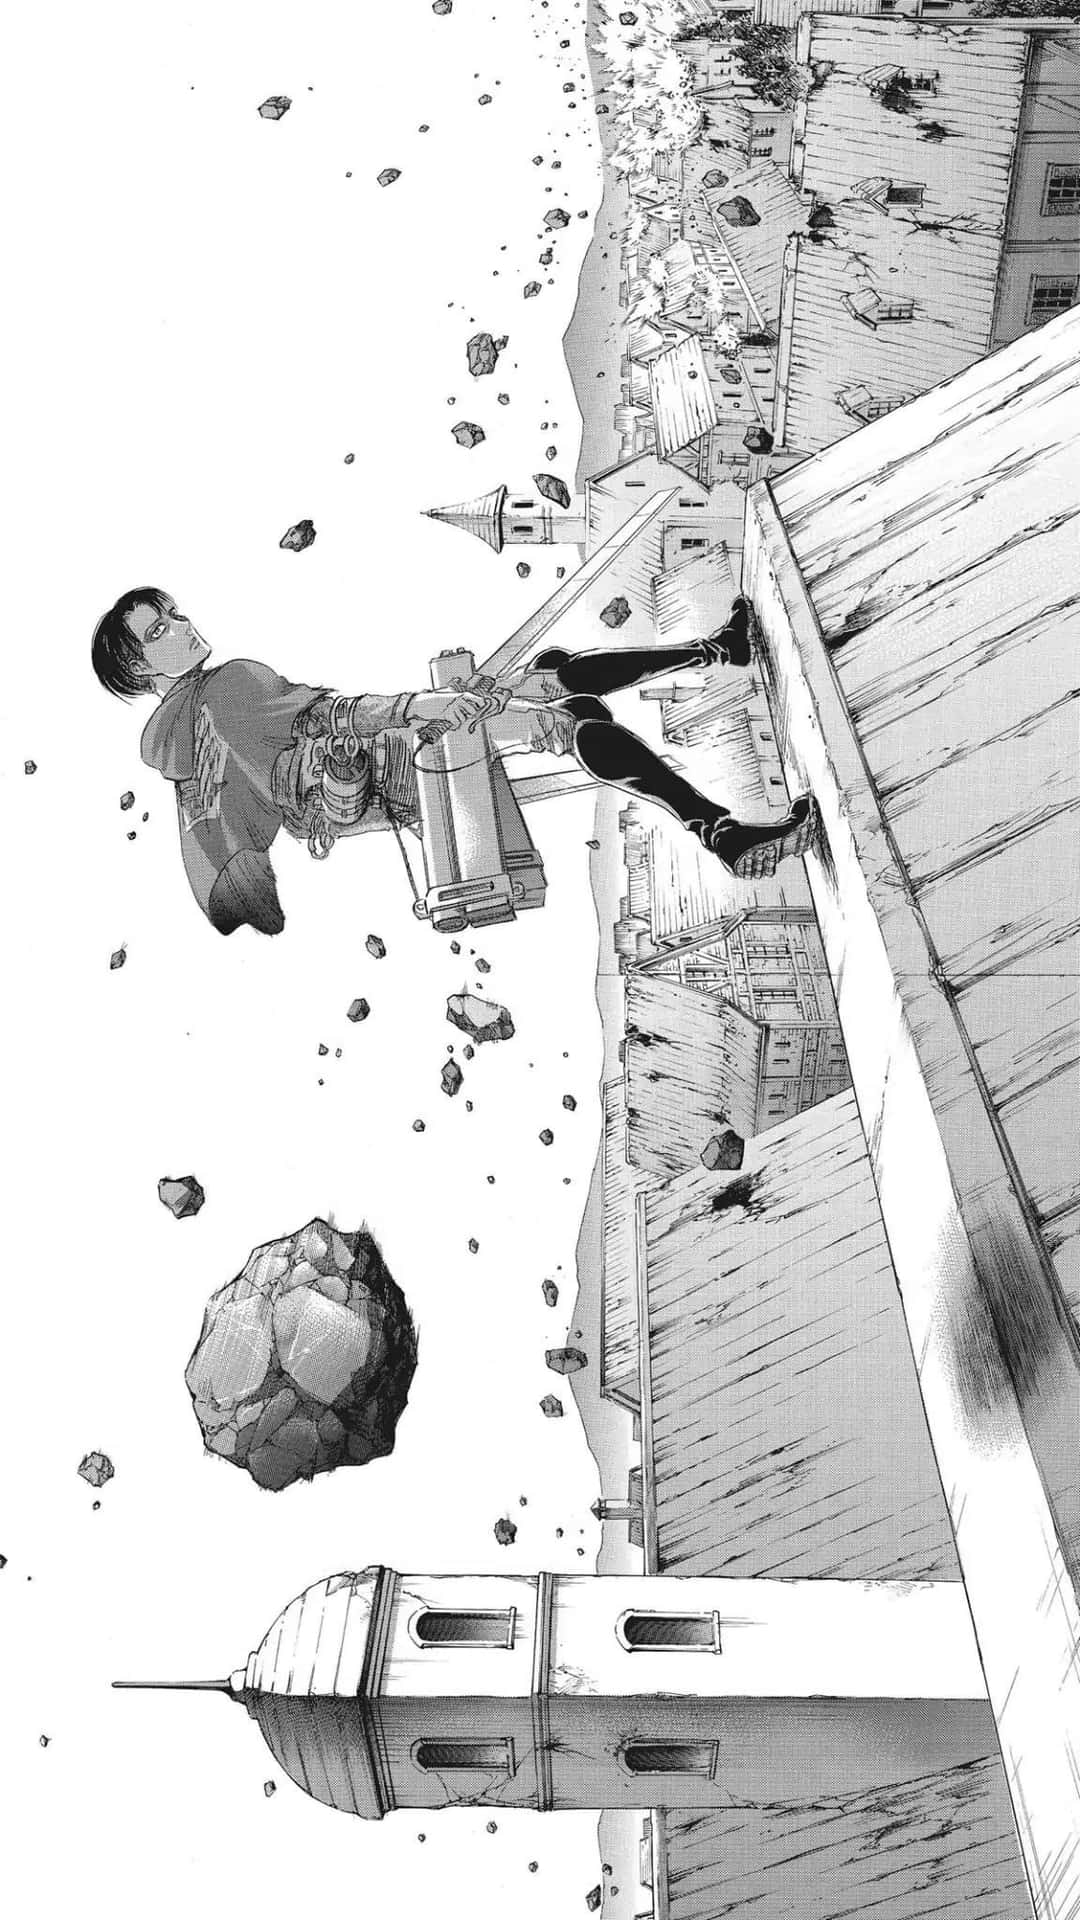 Unstoppable Power - An Attack on Titan Manga Fan Art Wallpaper